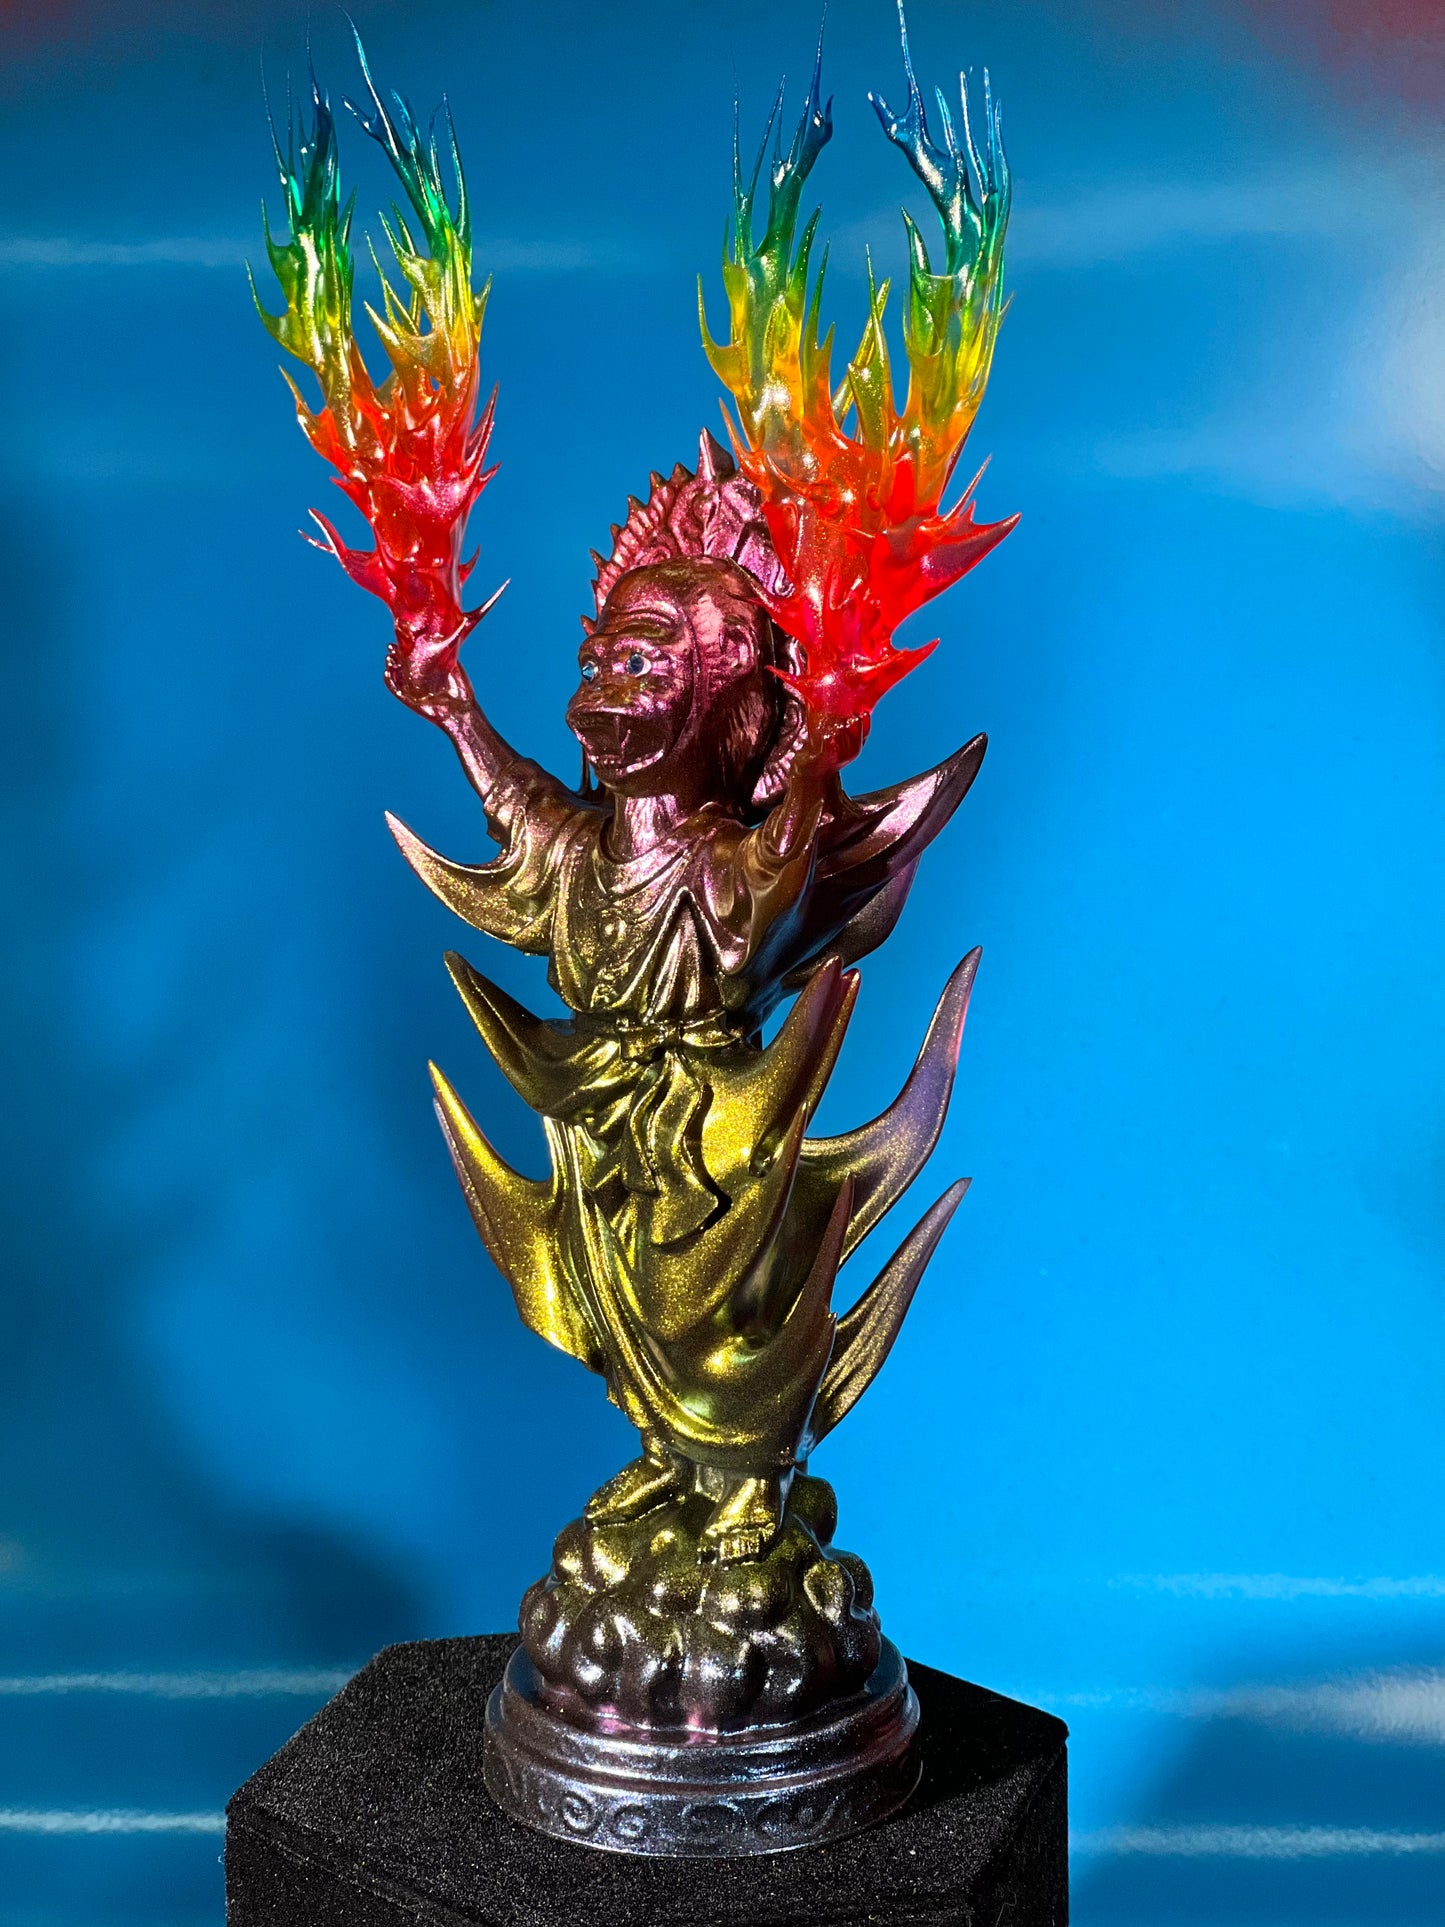 The Child Ape Jesus, Powered Up: Rainbow Flame Metal Heart